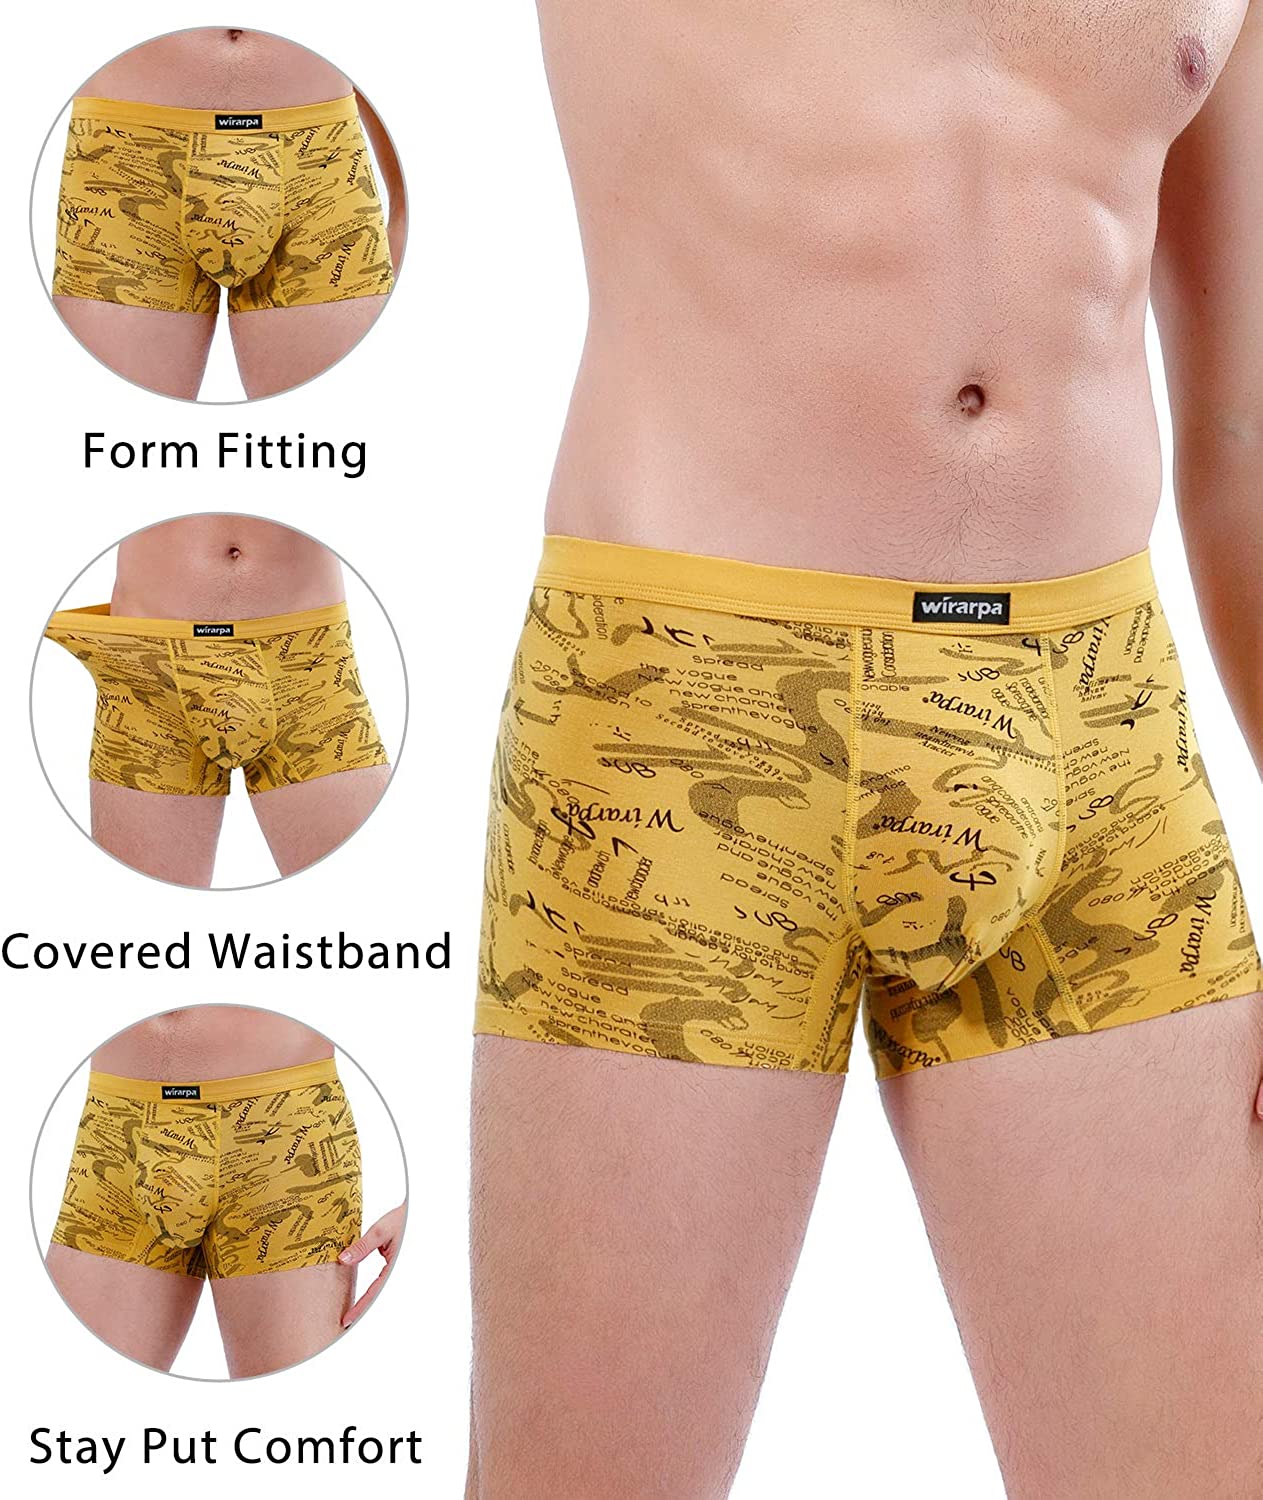 Men's Breathable Modal Microfiber Trunks Underwear Covered Band Multipack